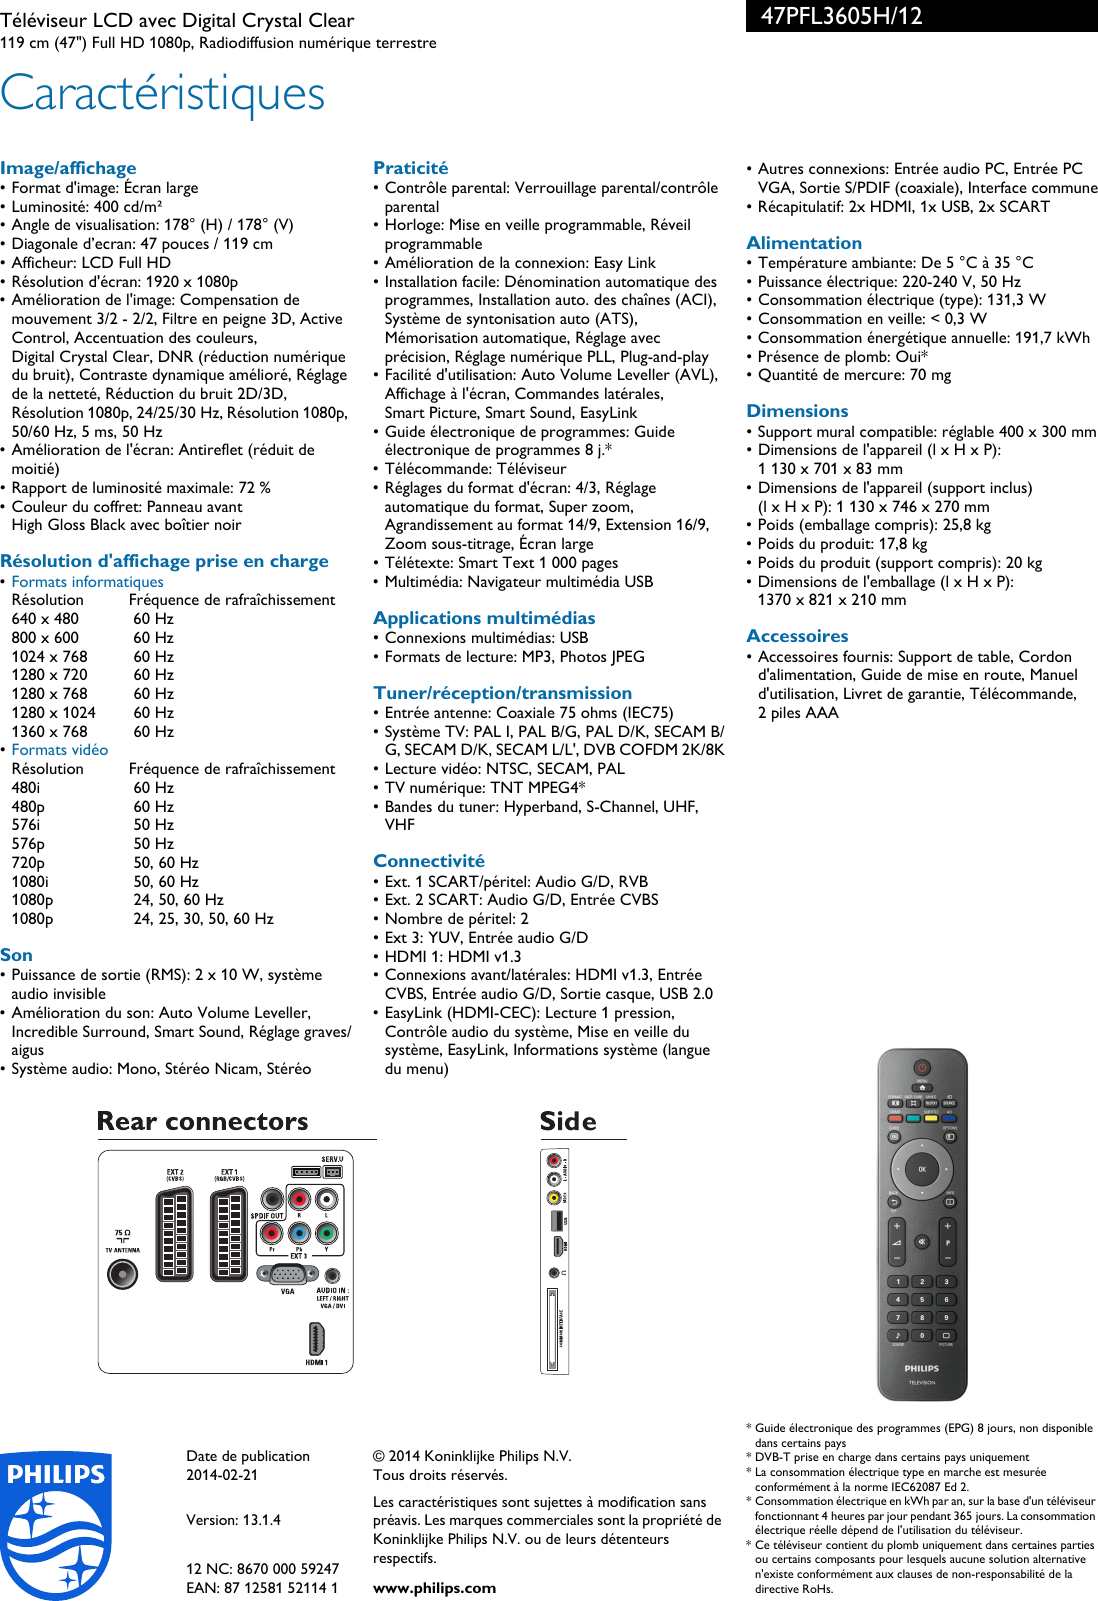 Page 3 of 3 - Philips 47PFL3605H/12 Leaflet 47PFL3605H_12 Released France (French)  User Manual Fiche Produit 47pfl3605h 12 Pss Frafr